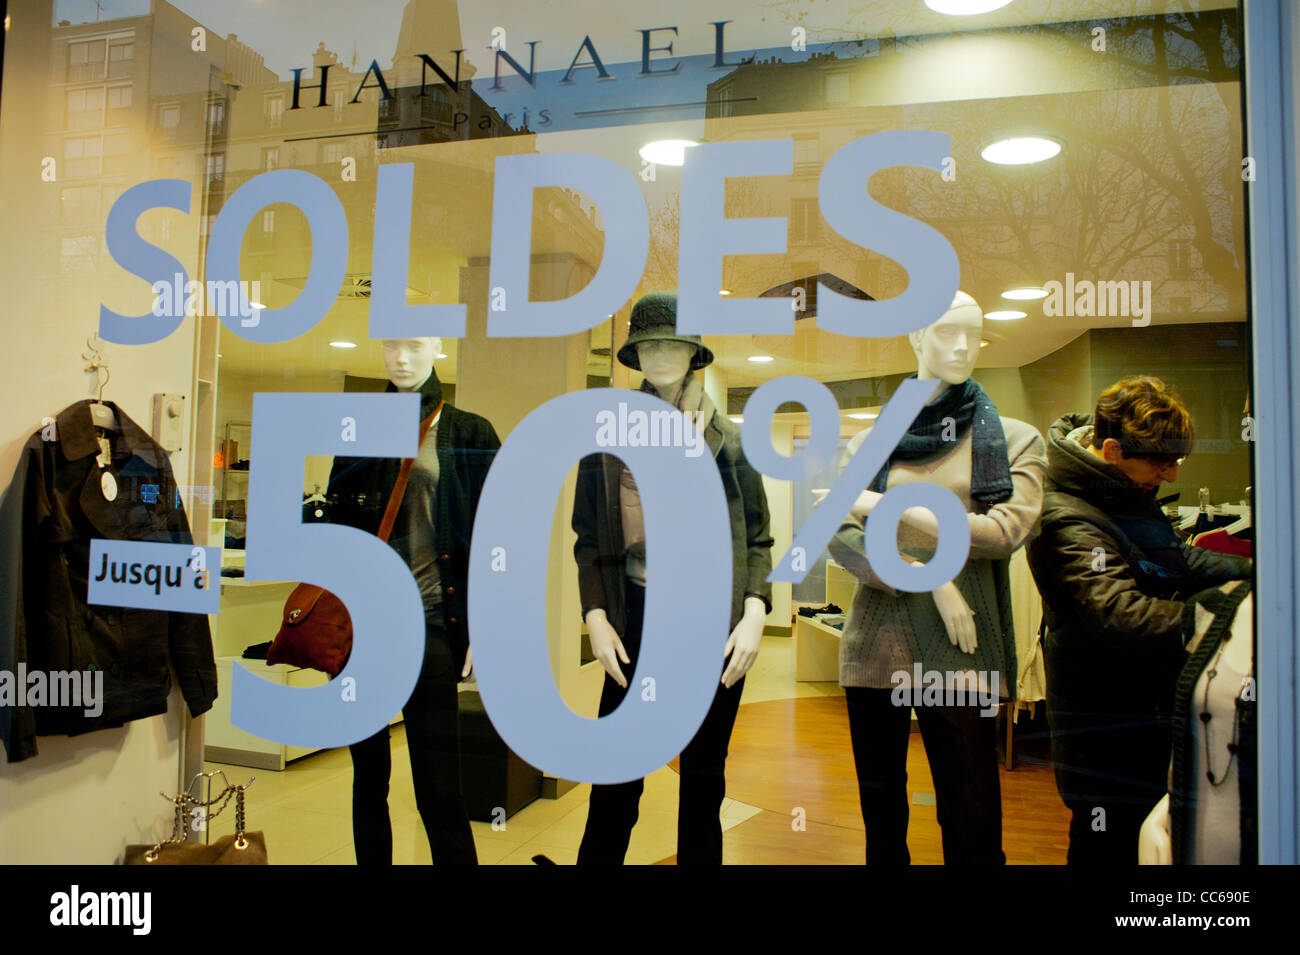 Paris, France, January Sales in Small Business Shops, "Hannael